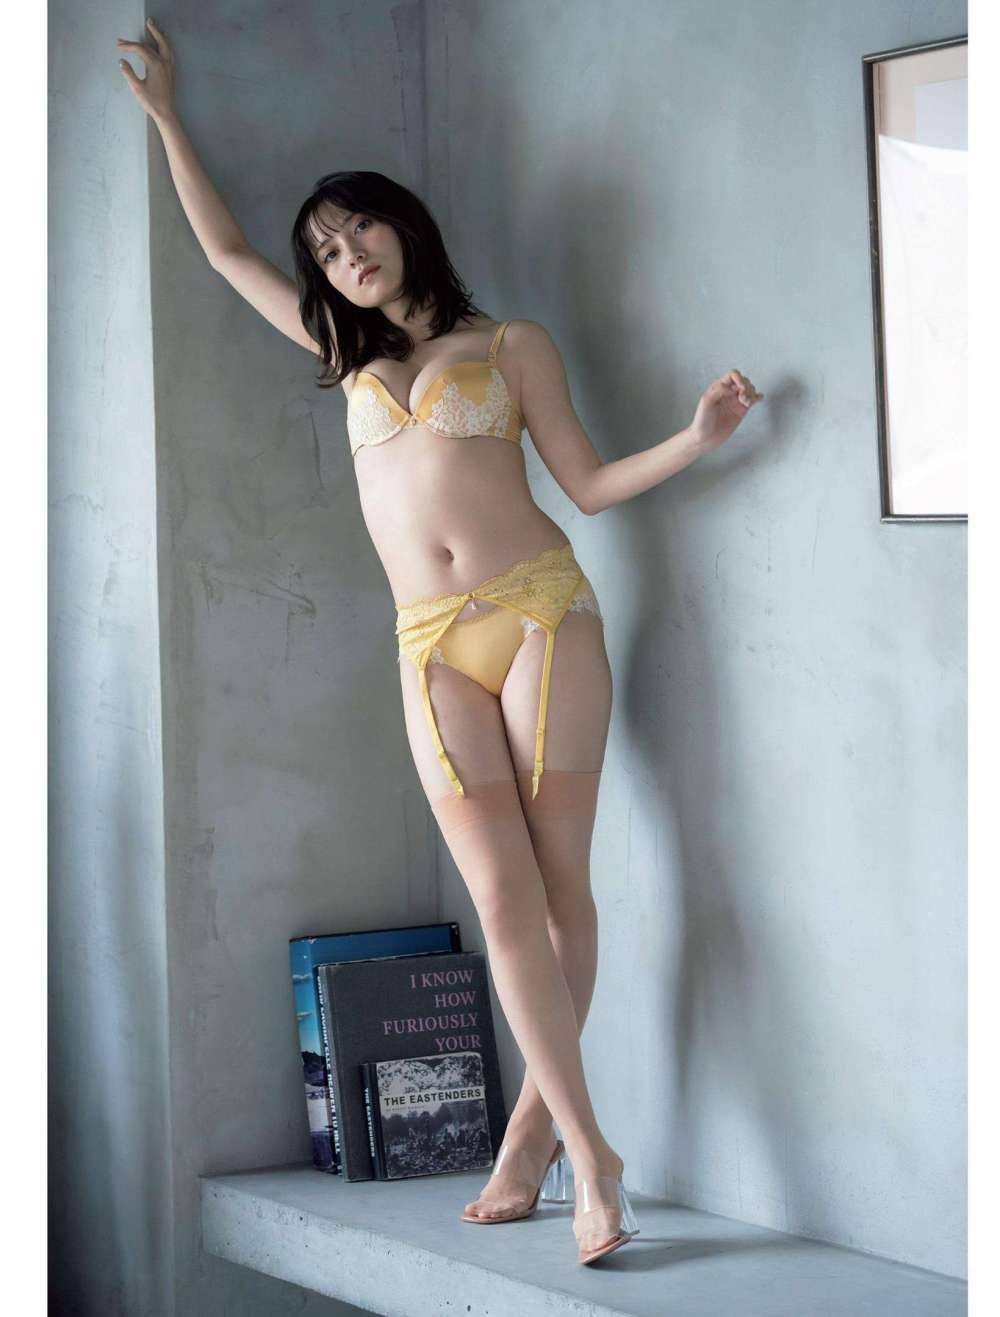 Nashiko Momotsuki Sexy and Hottest Photos , Latest Pics